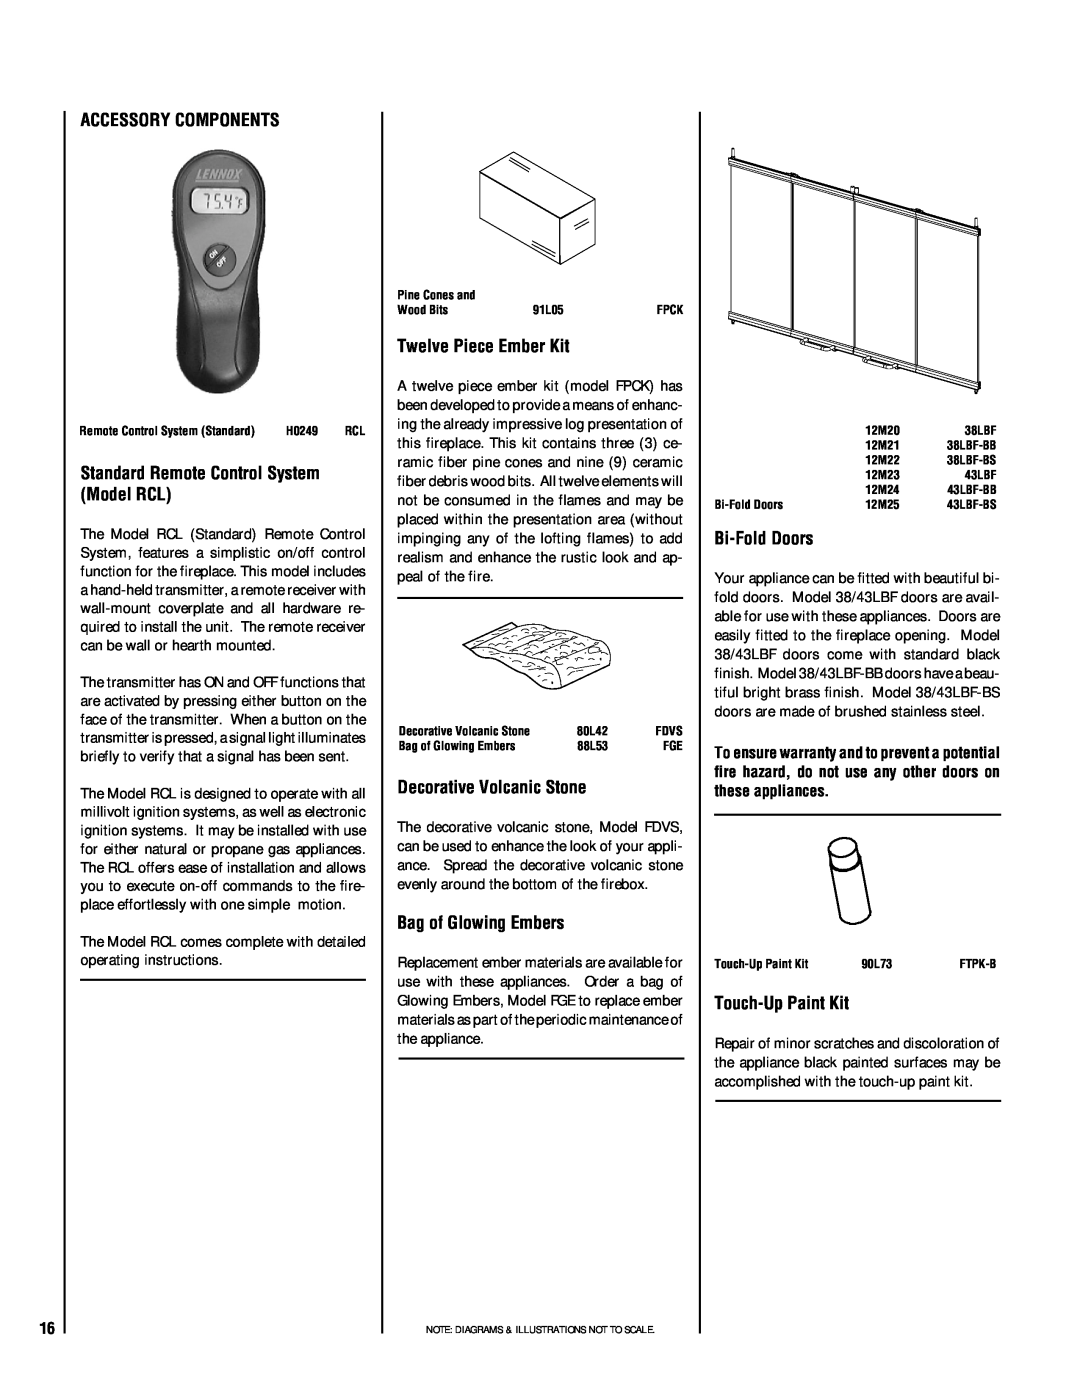 Lennox Hearth LBV-3824EN manual Accessory Components, Standard Remote Control System Model RCL, Twelve Piece Ember Kit 